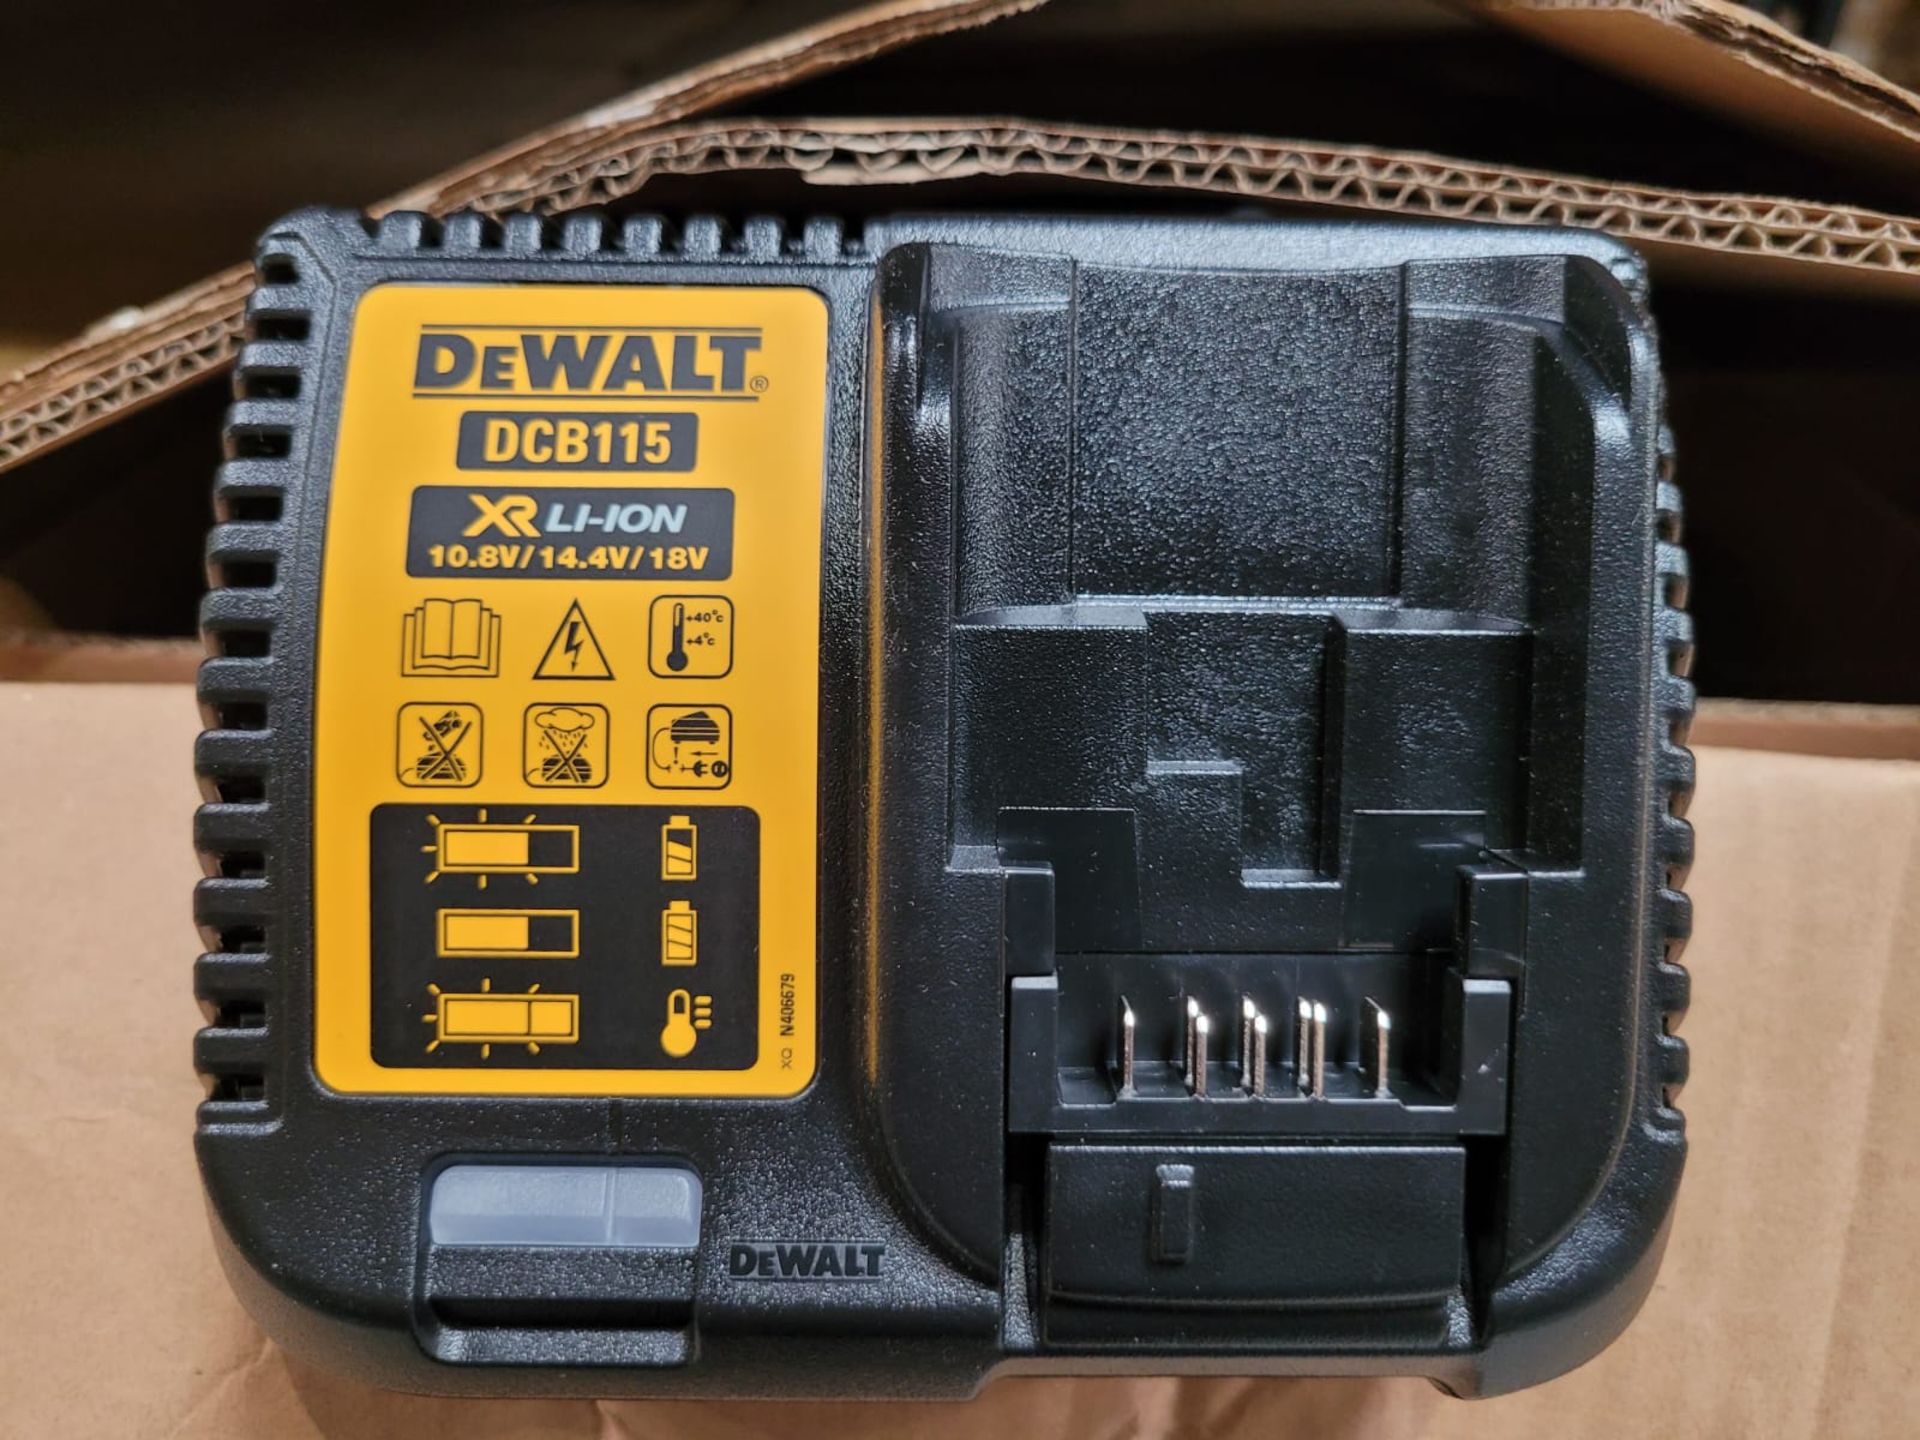 Dewalt charger brand new - Image 3 of 4